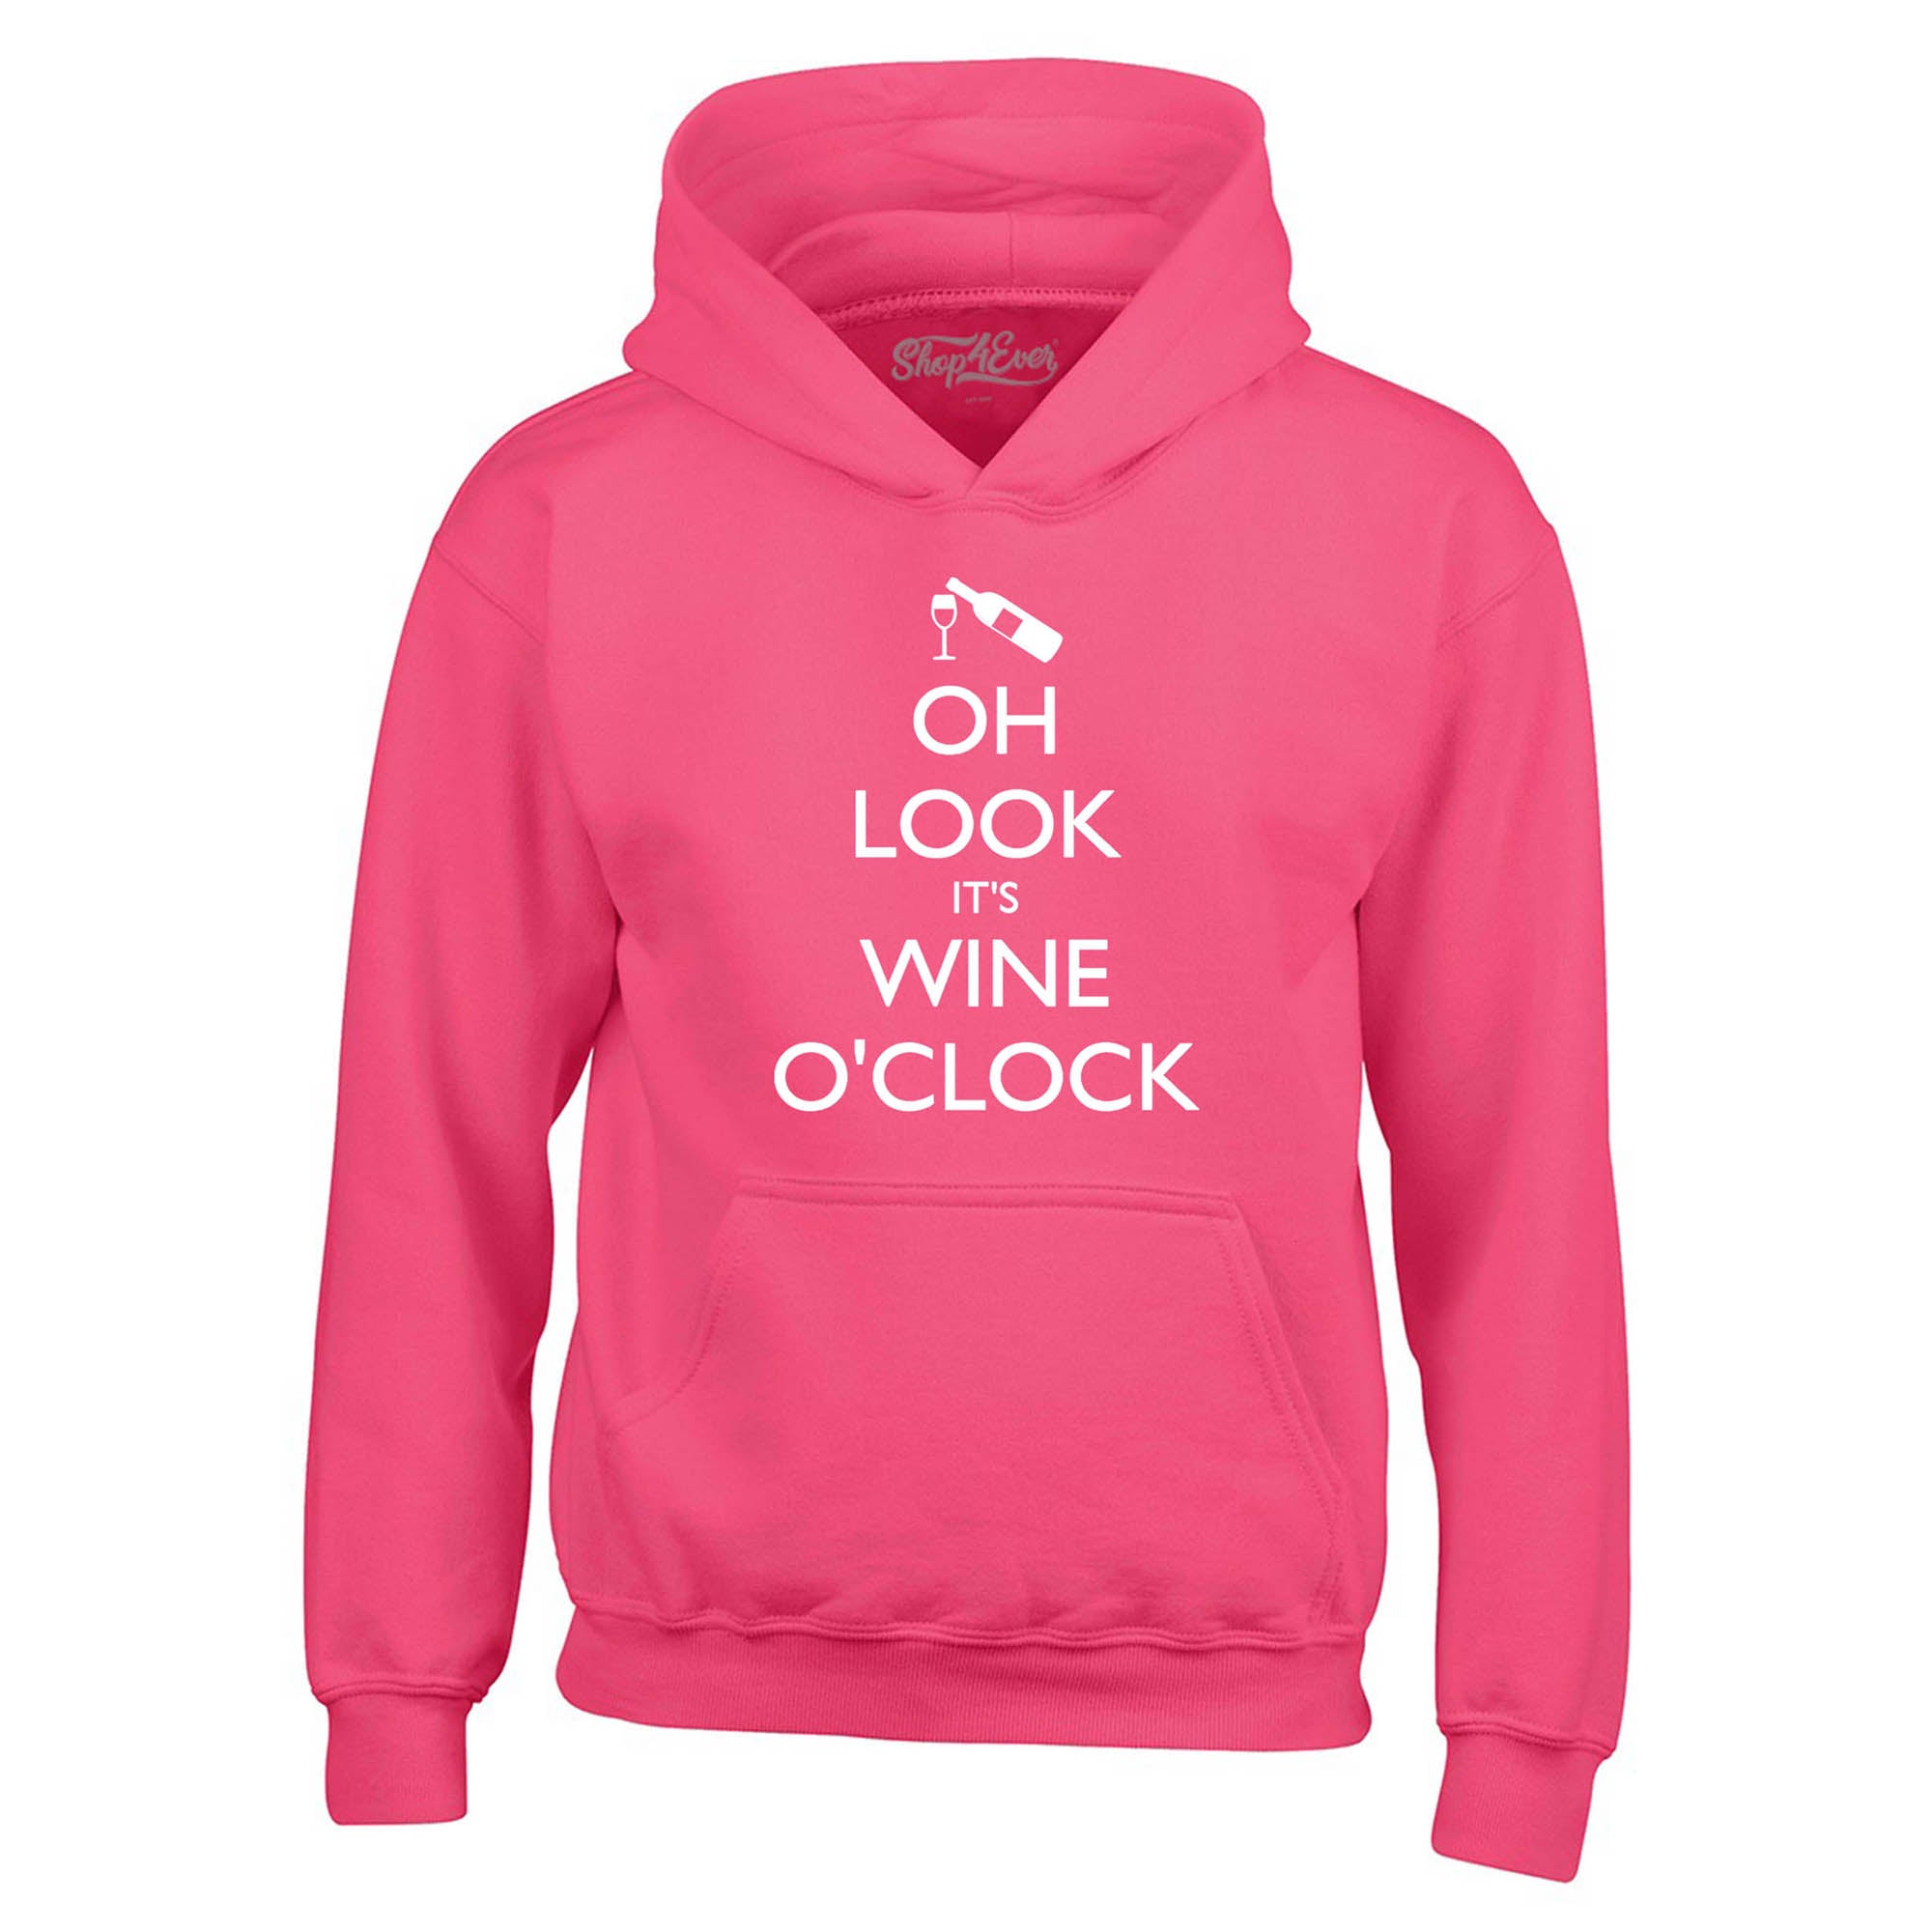 Oh Look It's Wine O'Clock Hoodies Drinking Sweatshirts